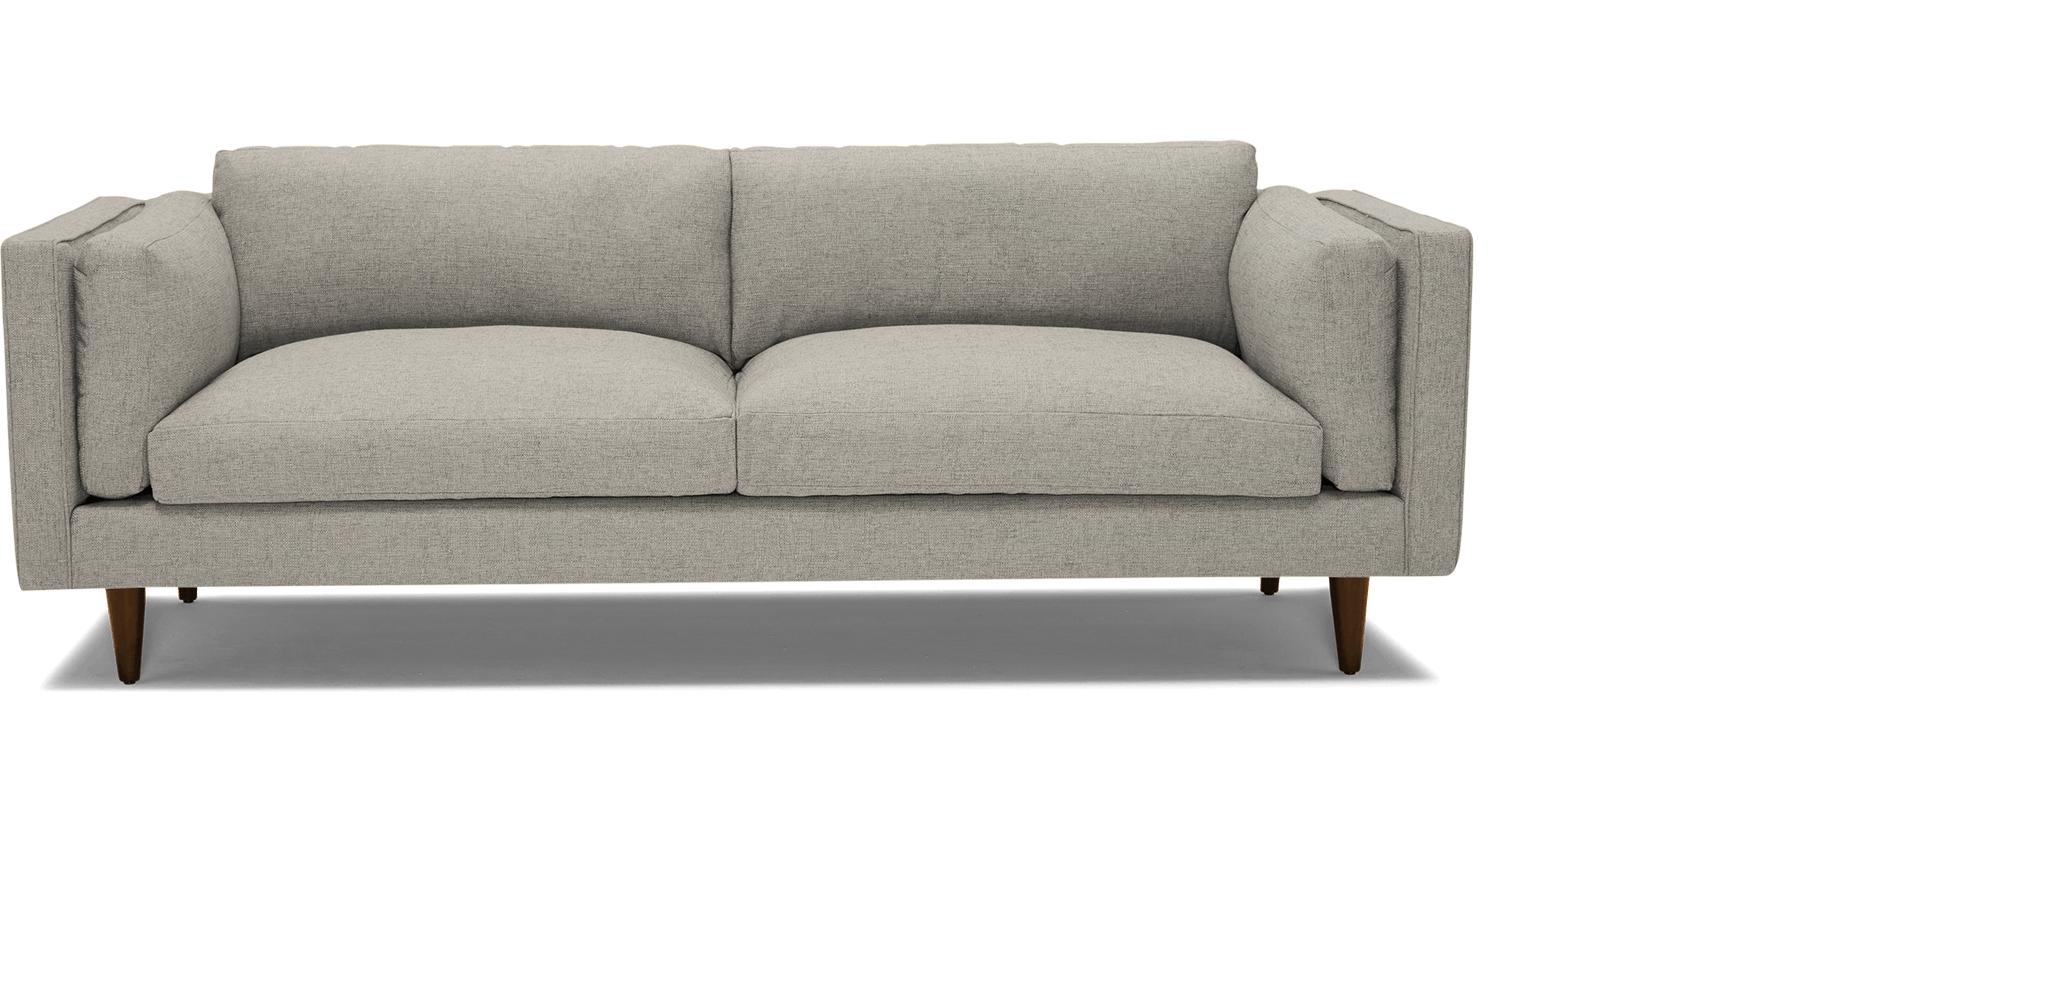 White Parker Mid Century Modern Sofa - Bloke Cotton - Mocha - Image 0